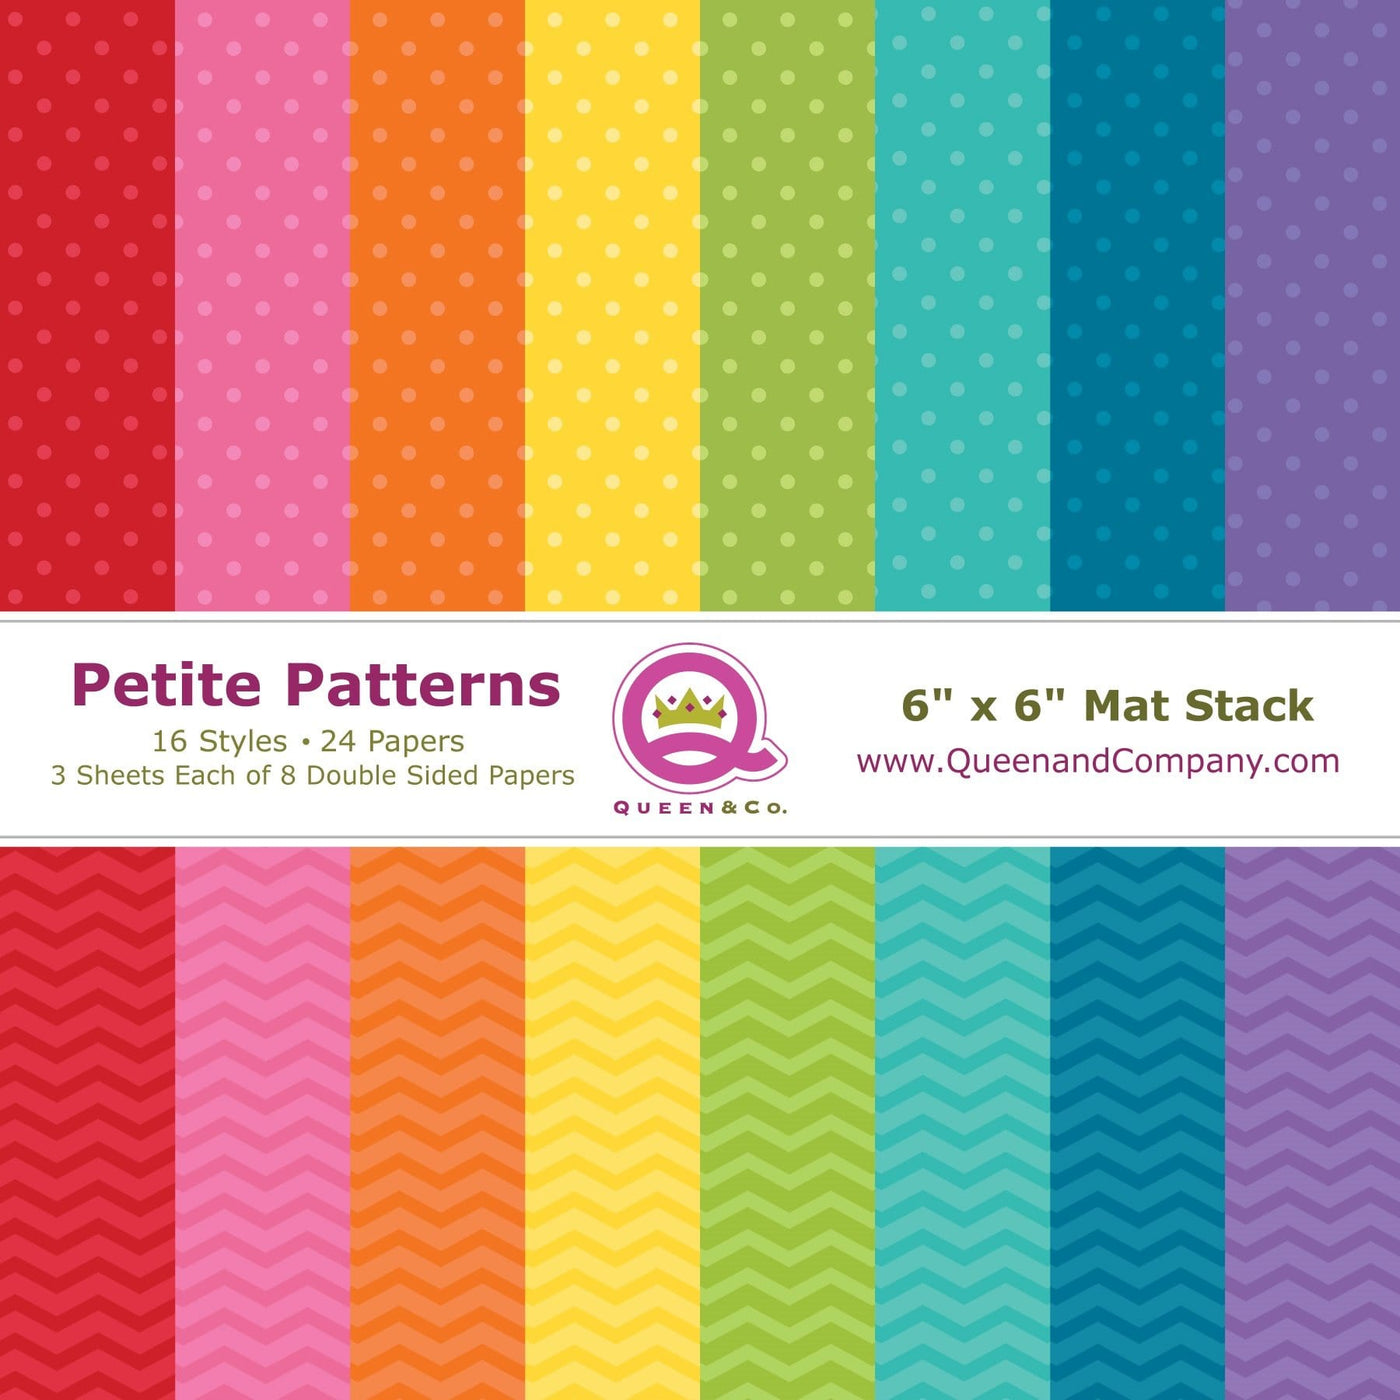 Petite Patterns Paper Pad